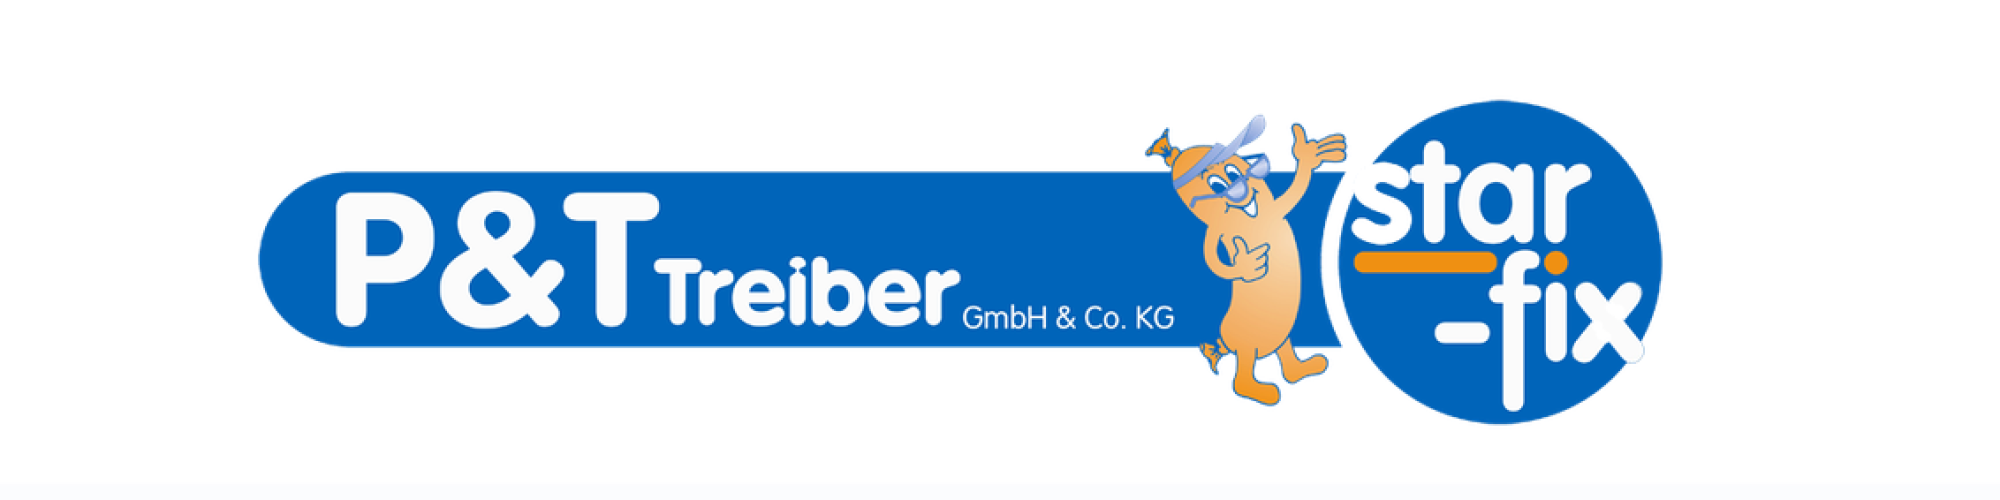 P&T Treiber GmbH & Co. KG